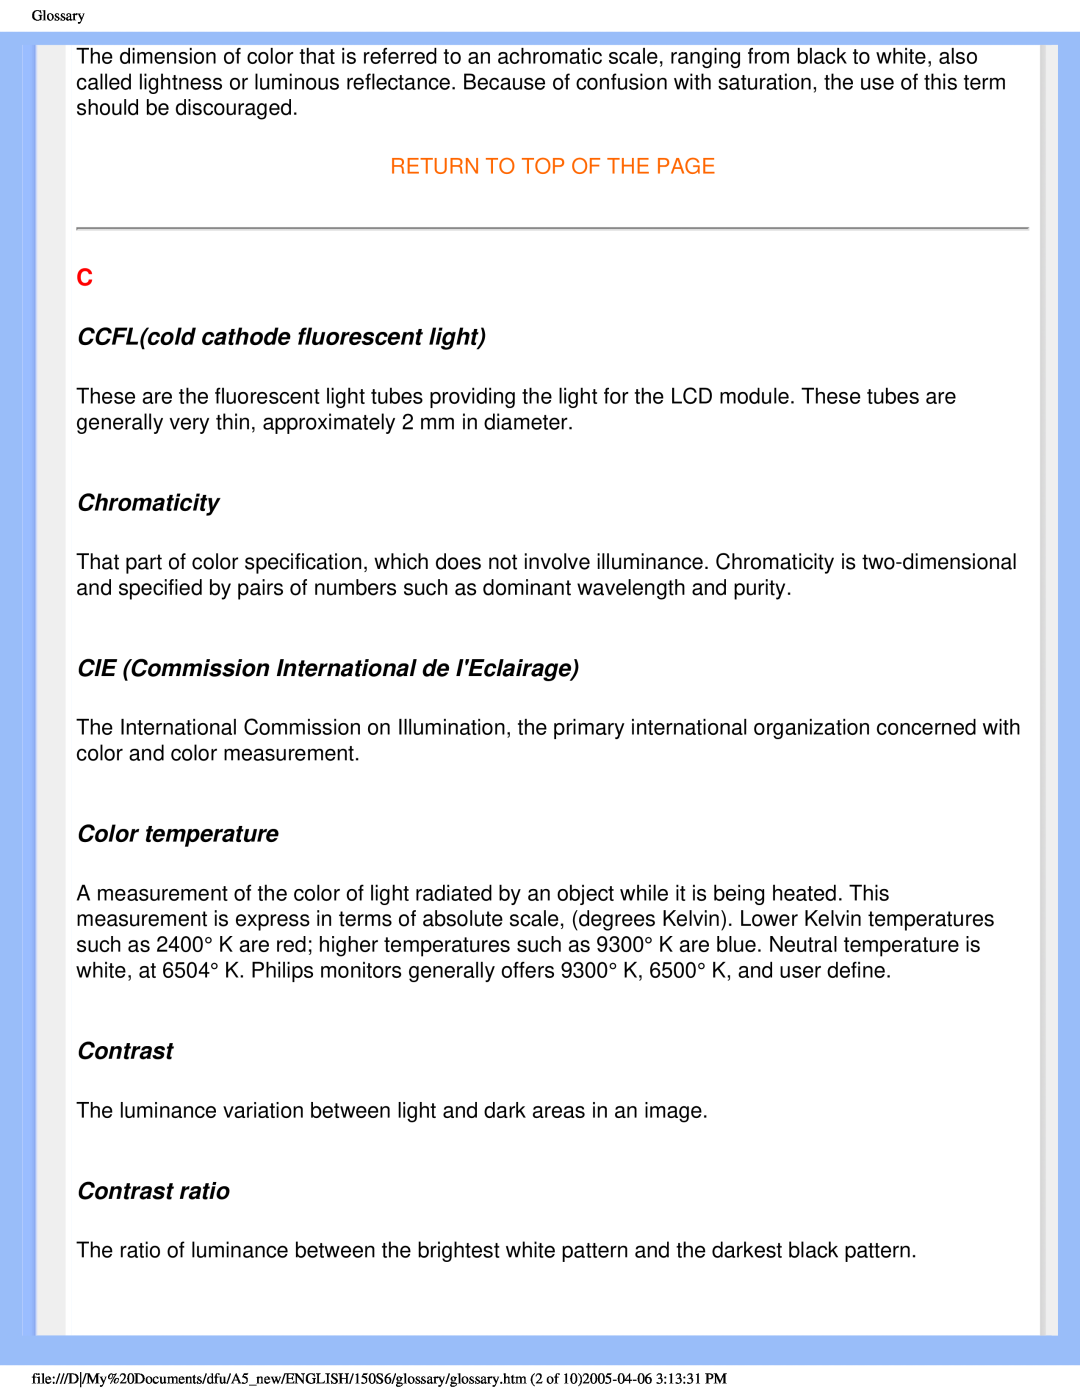 Philips 150S6 CCFLcold cathode fluorescent light, Chromaticity, CIE Commission International de IEclairage, Contrast 